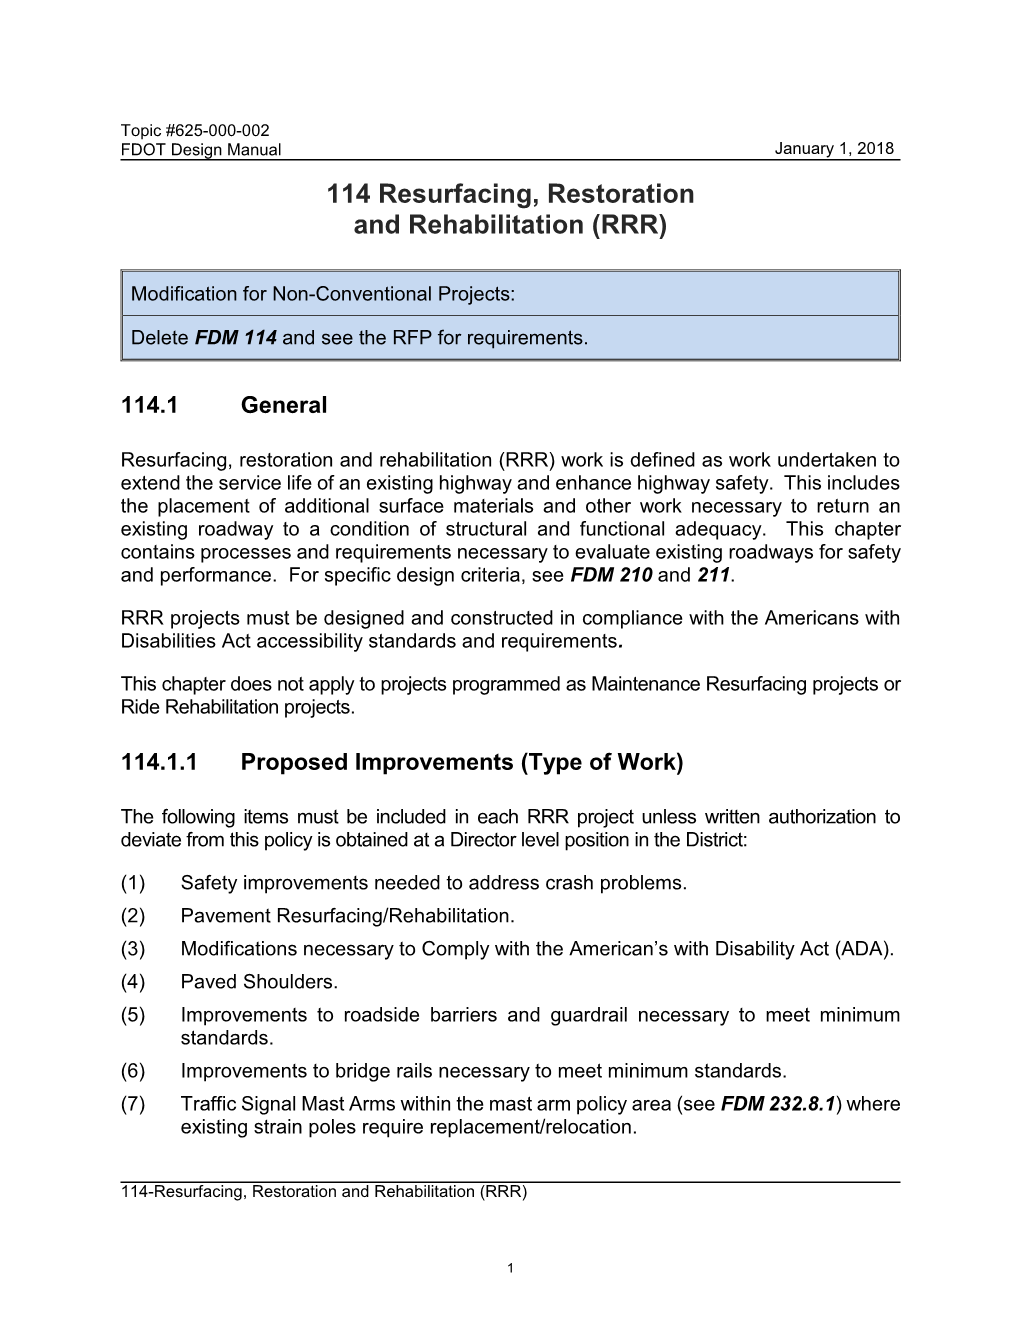 114 Resurfacing, Restoration and Rehabilitation (RRR)